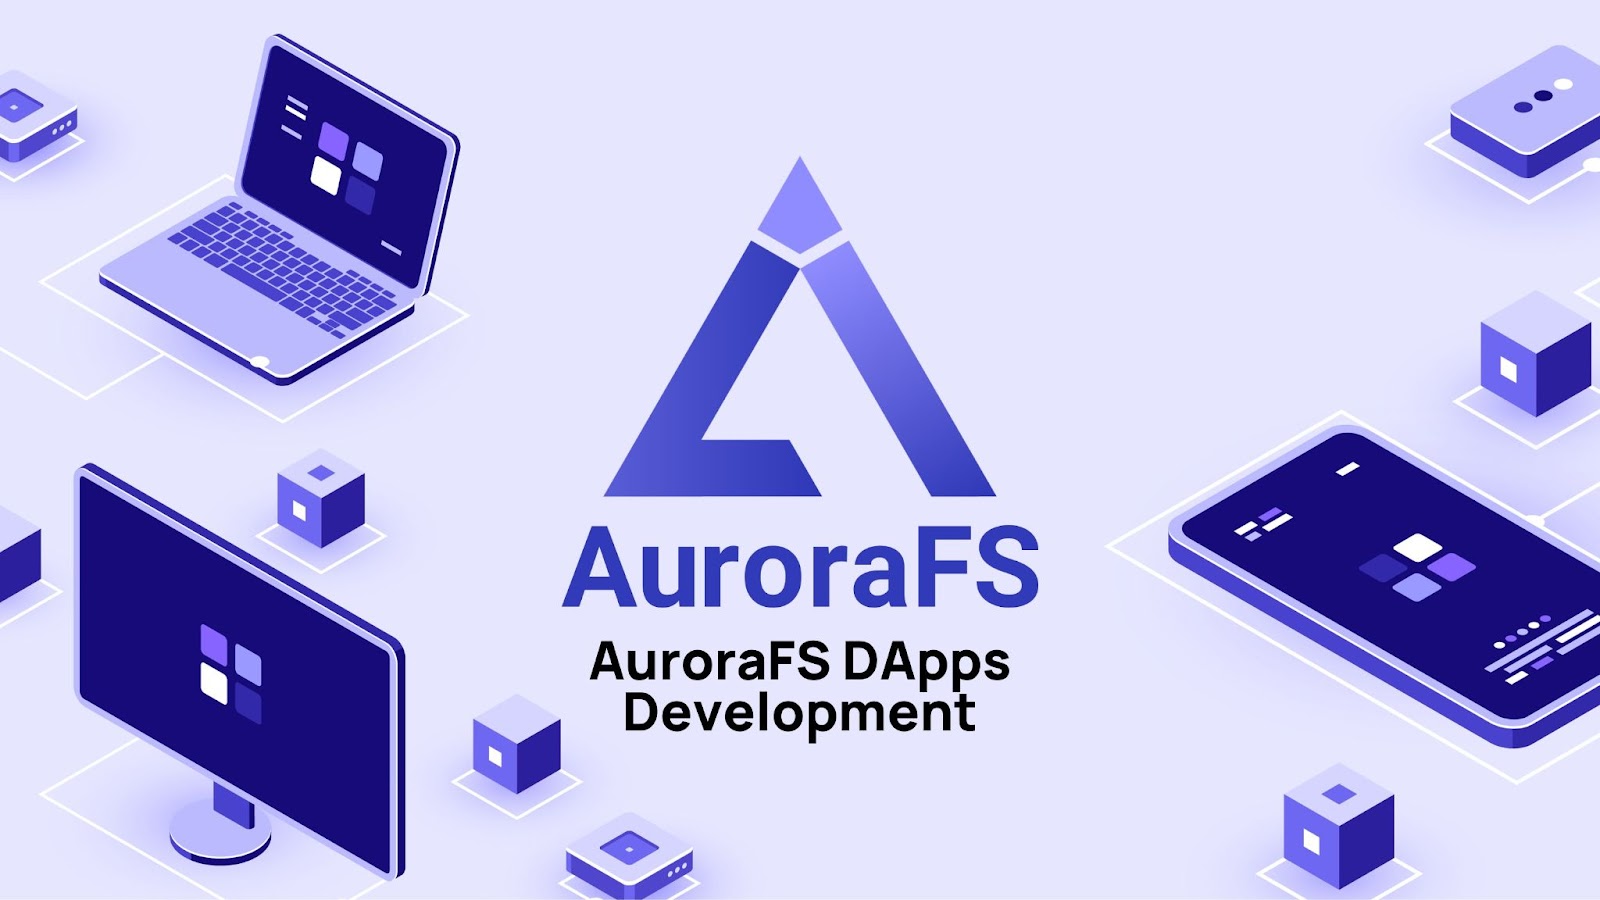 AuroraFS DApps Development Capabilities to Be EnhancedBitcoin.com MediaBitcoin News